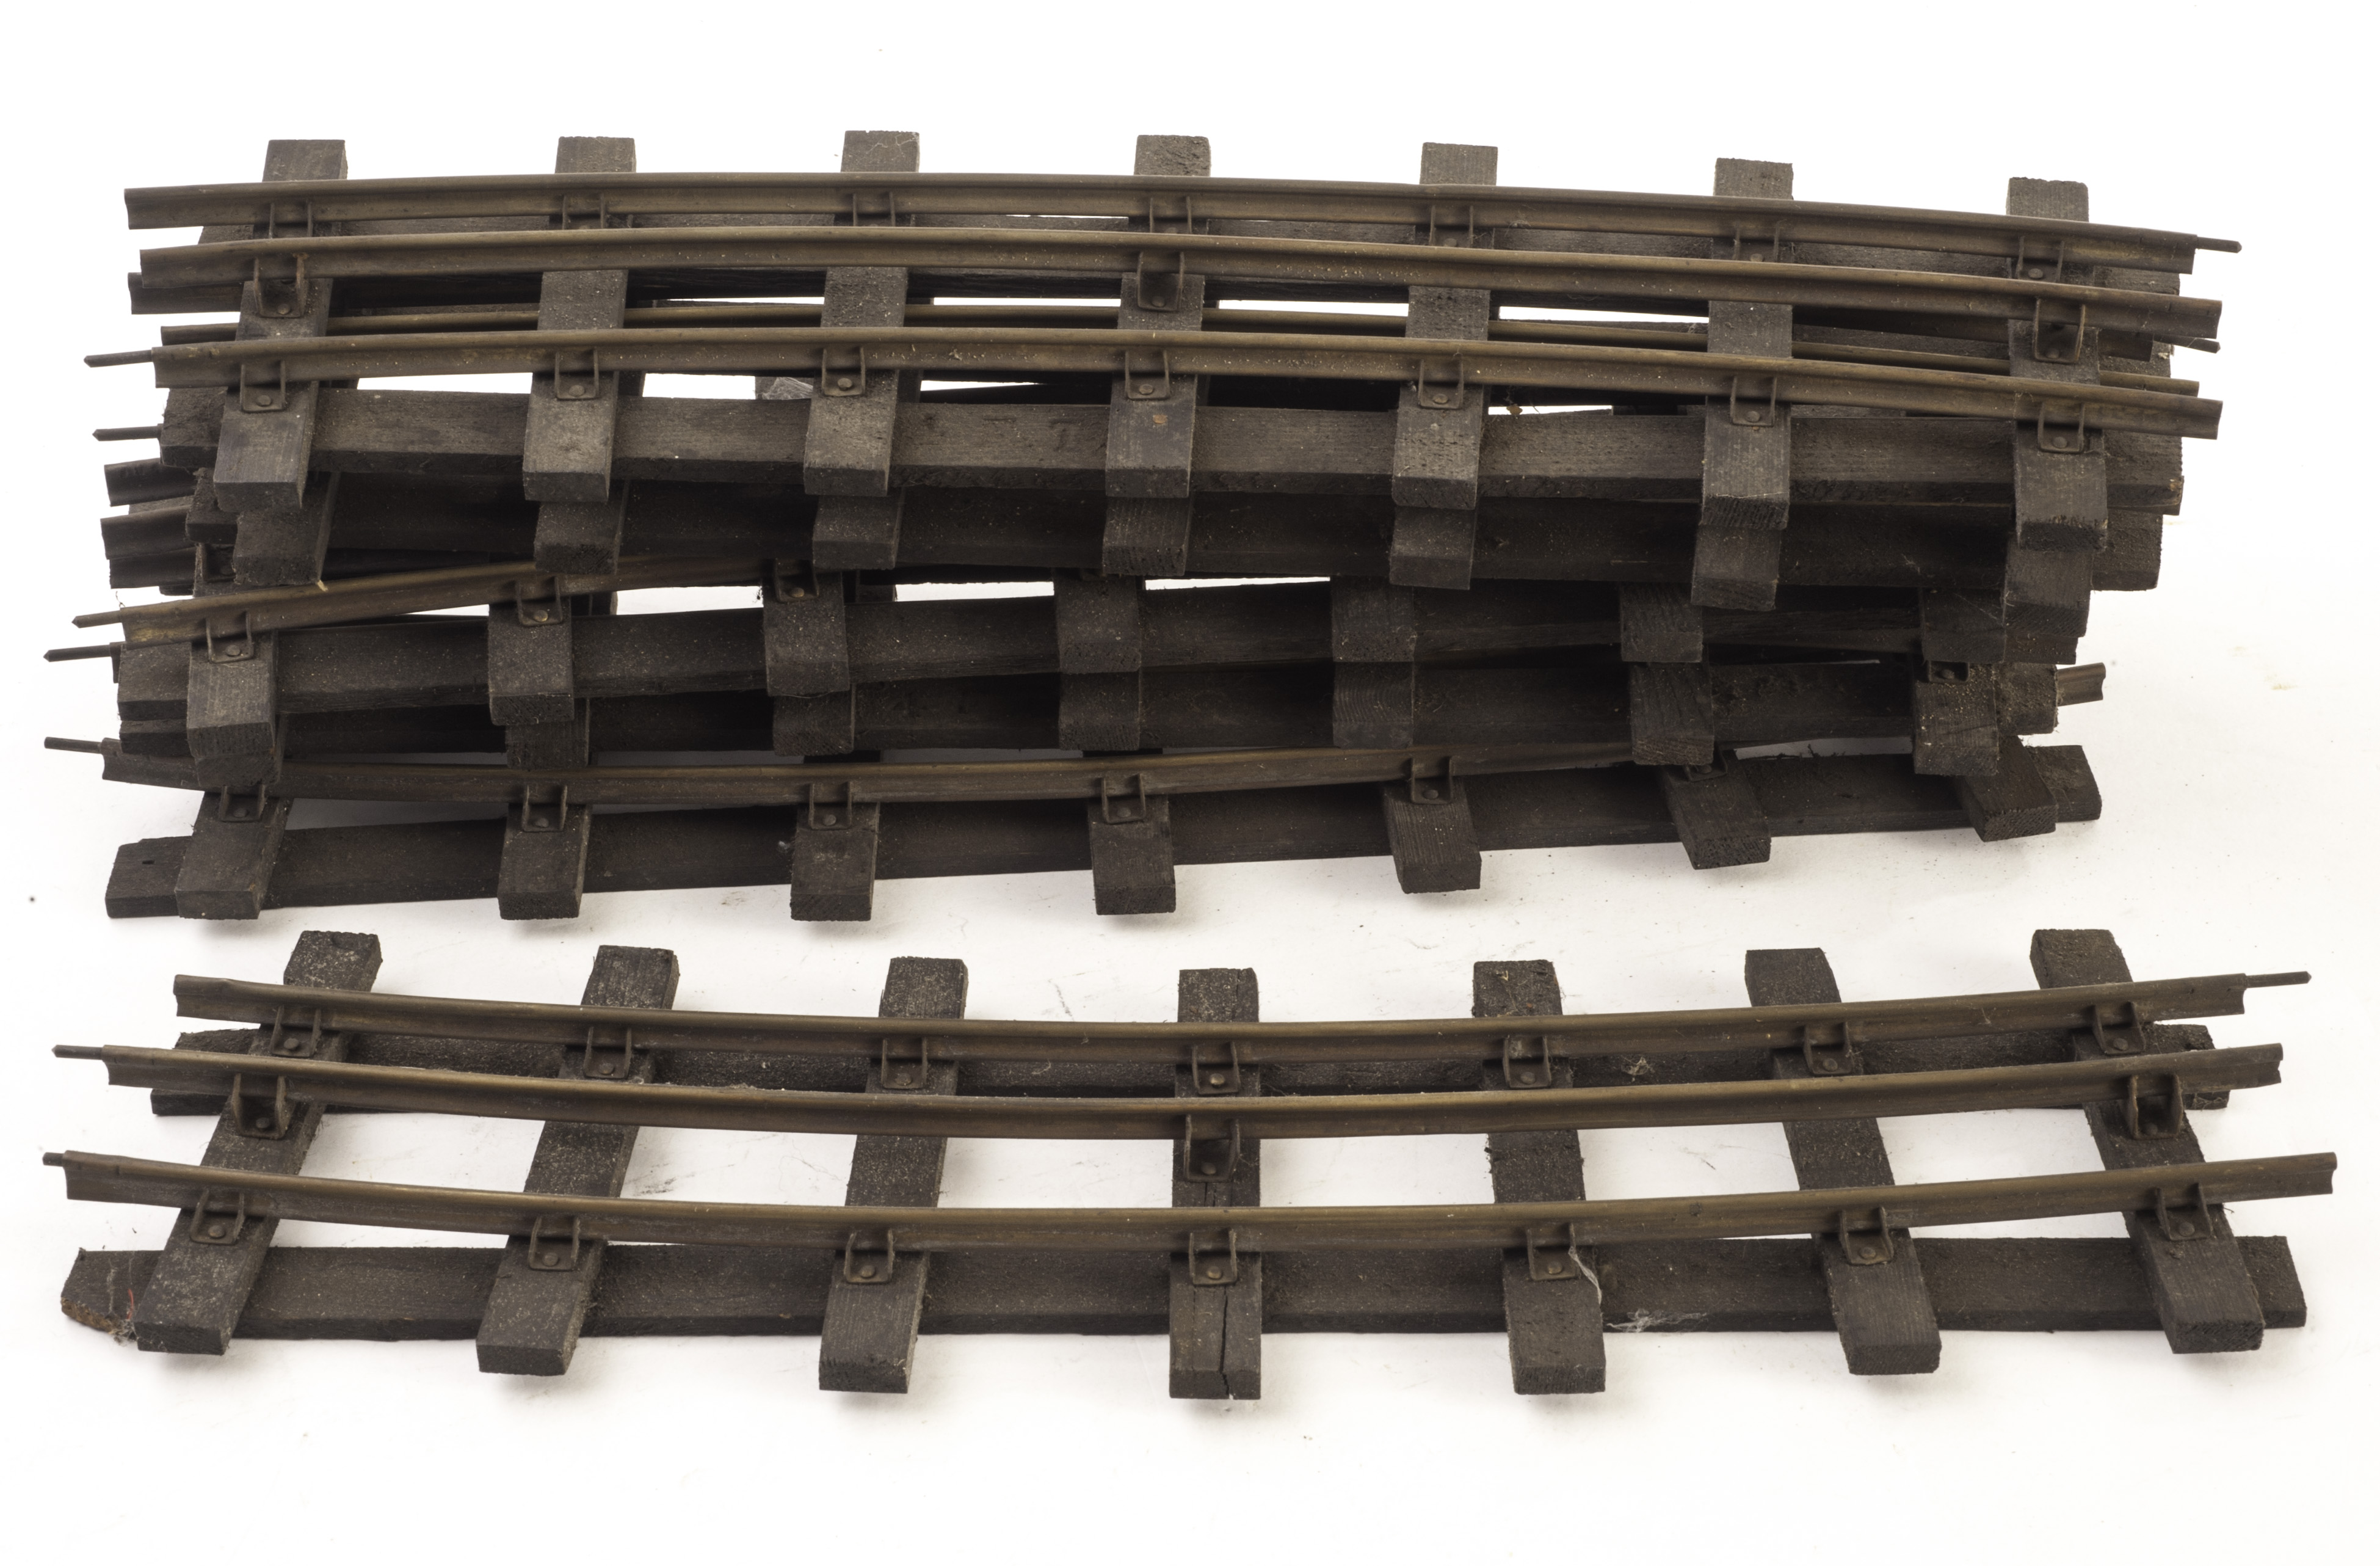 Bassett-Lowke 0 Gauge Track: original wooden sleeper track, comprising 4 R/H AND 4 L/H points, 11